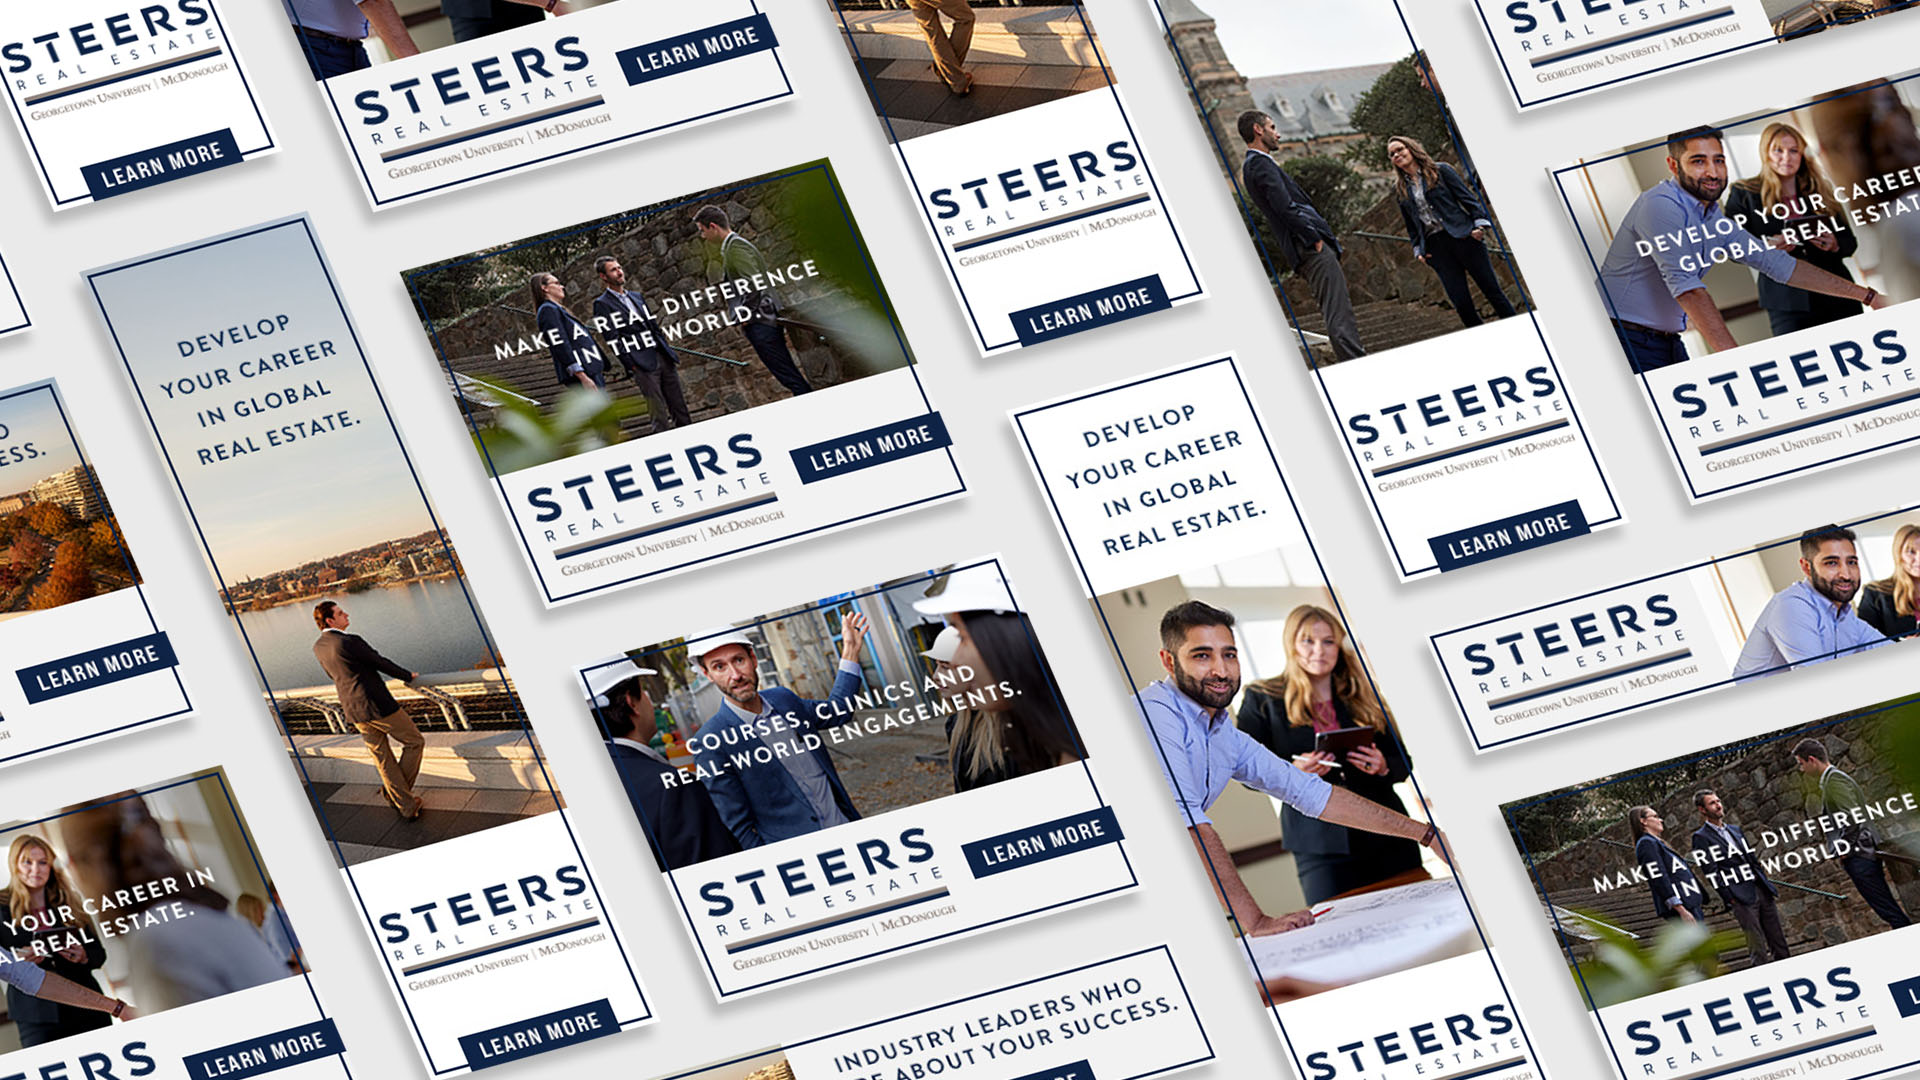 Steers Center online display ads